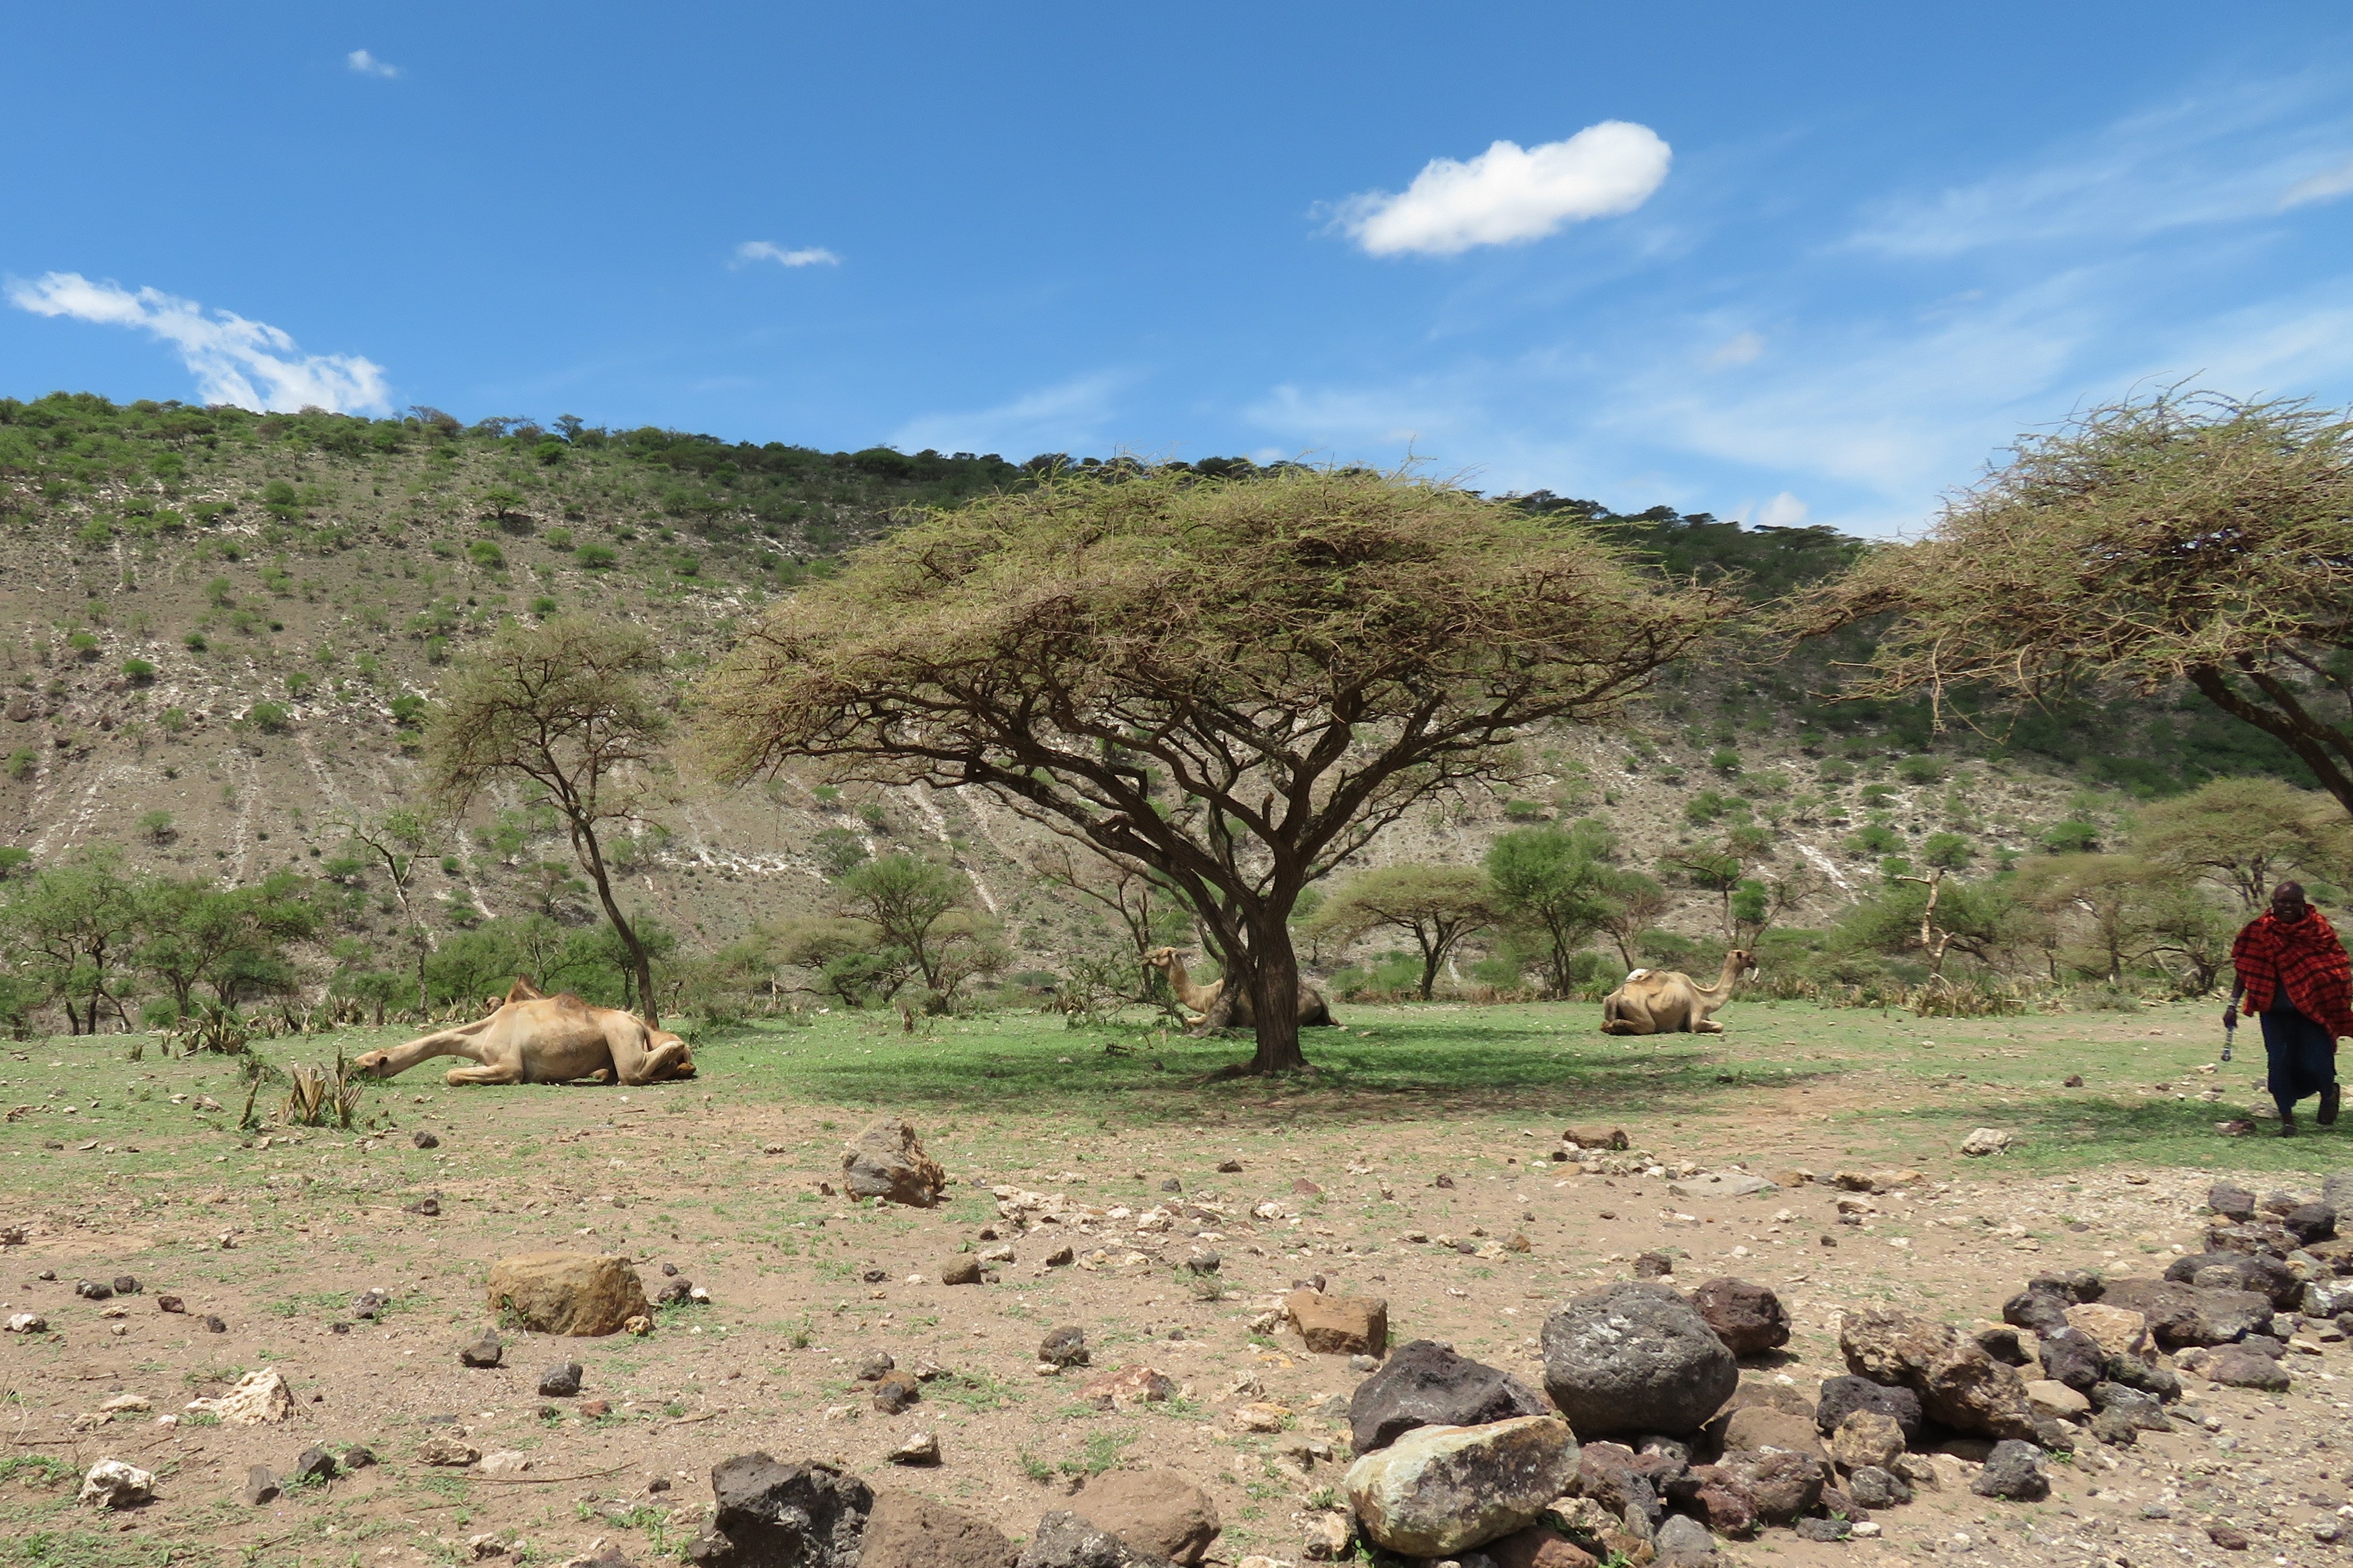 Maasai with camels